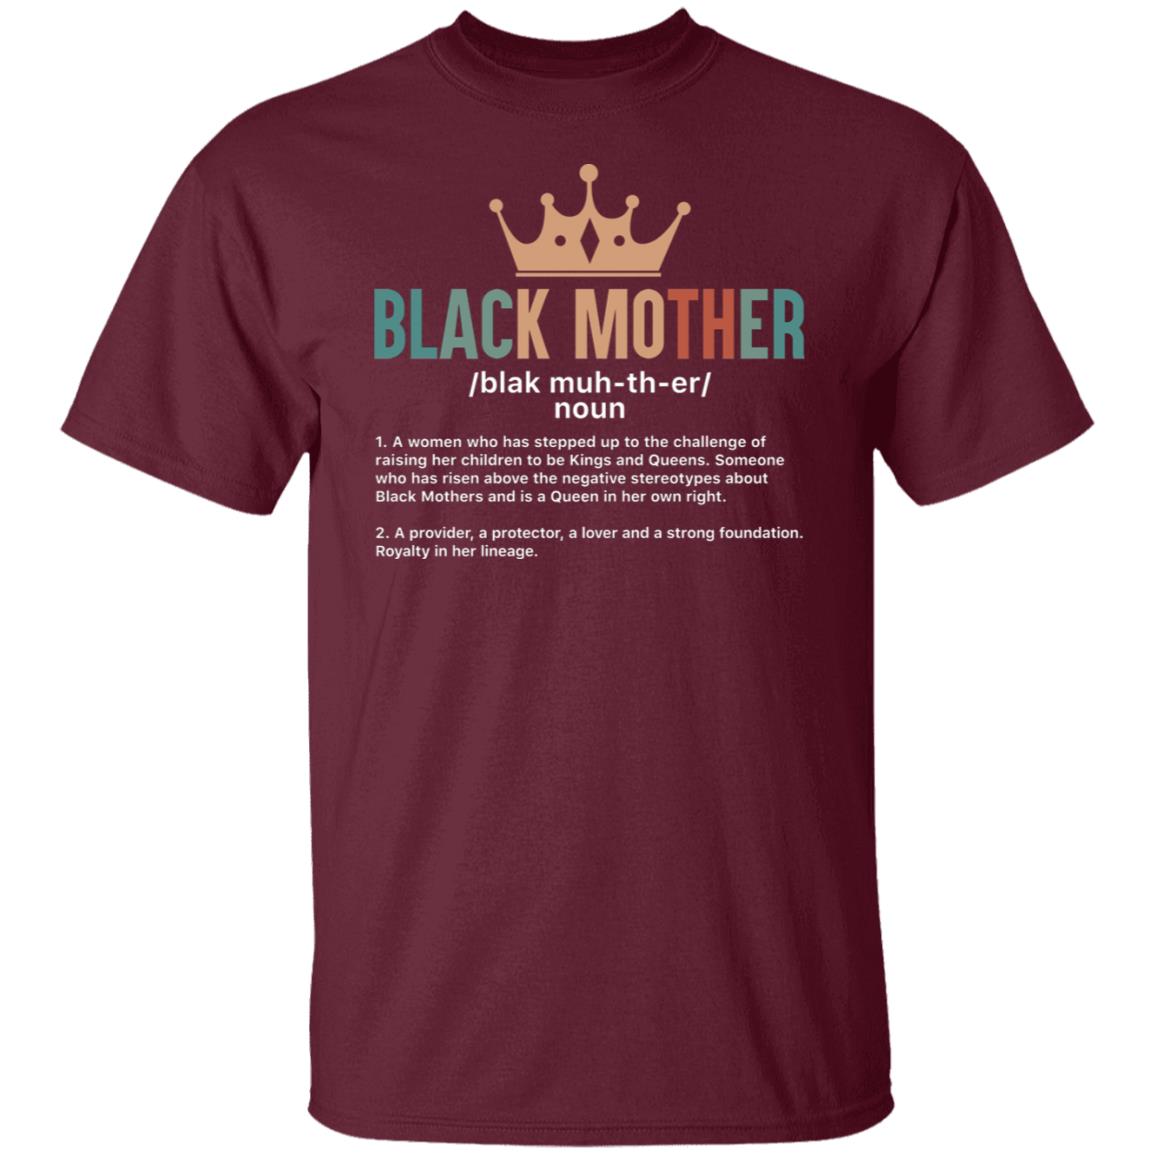 Black Mother T-shirt Apparel Gearment Unisex Tee Maroon S